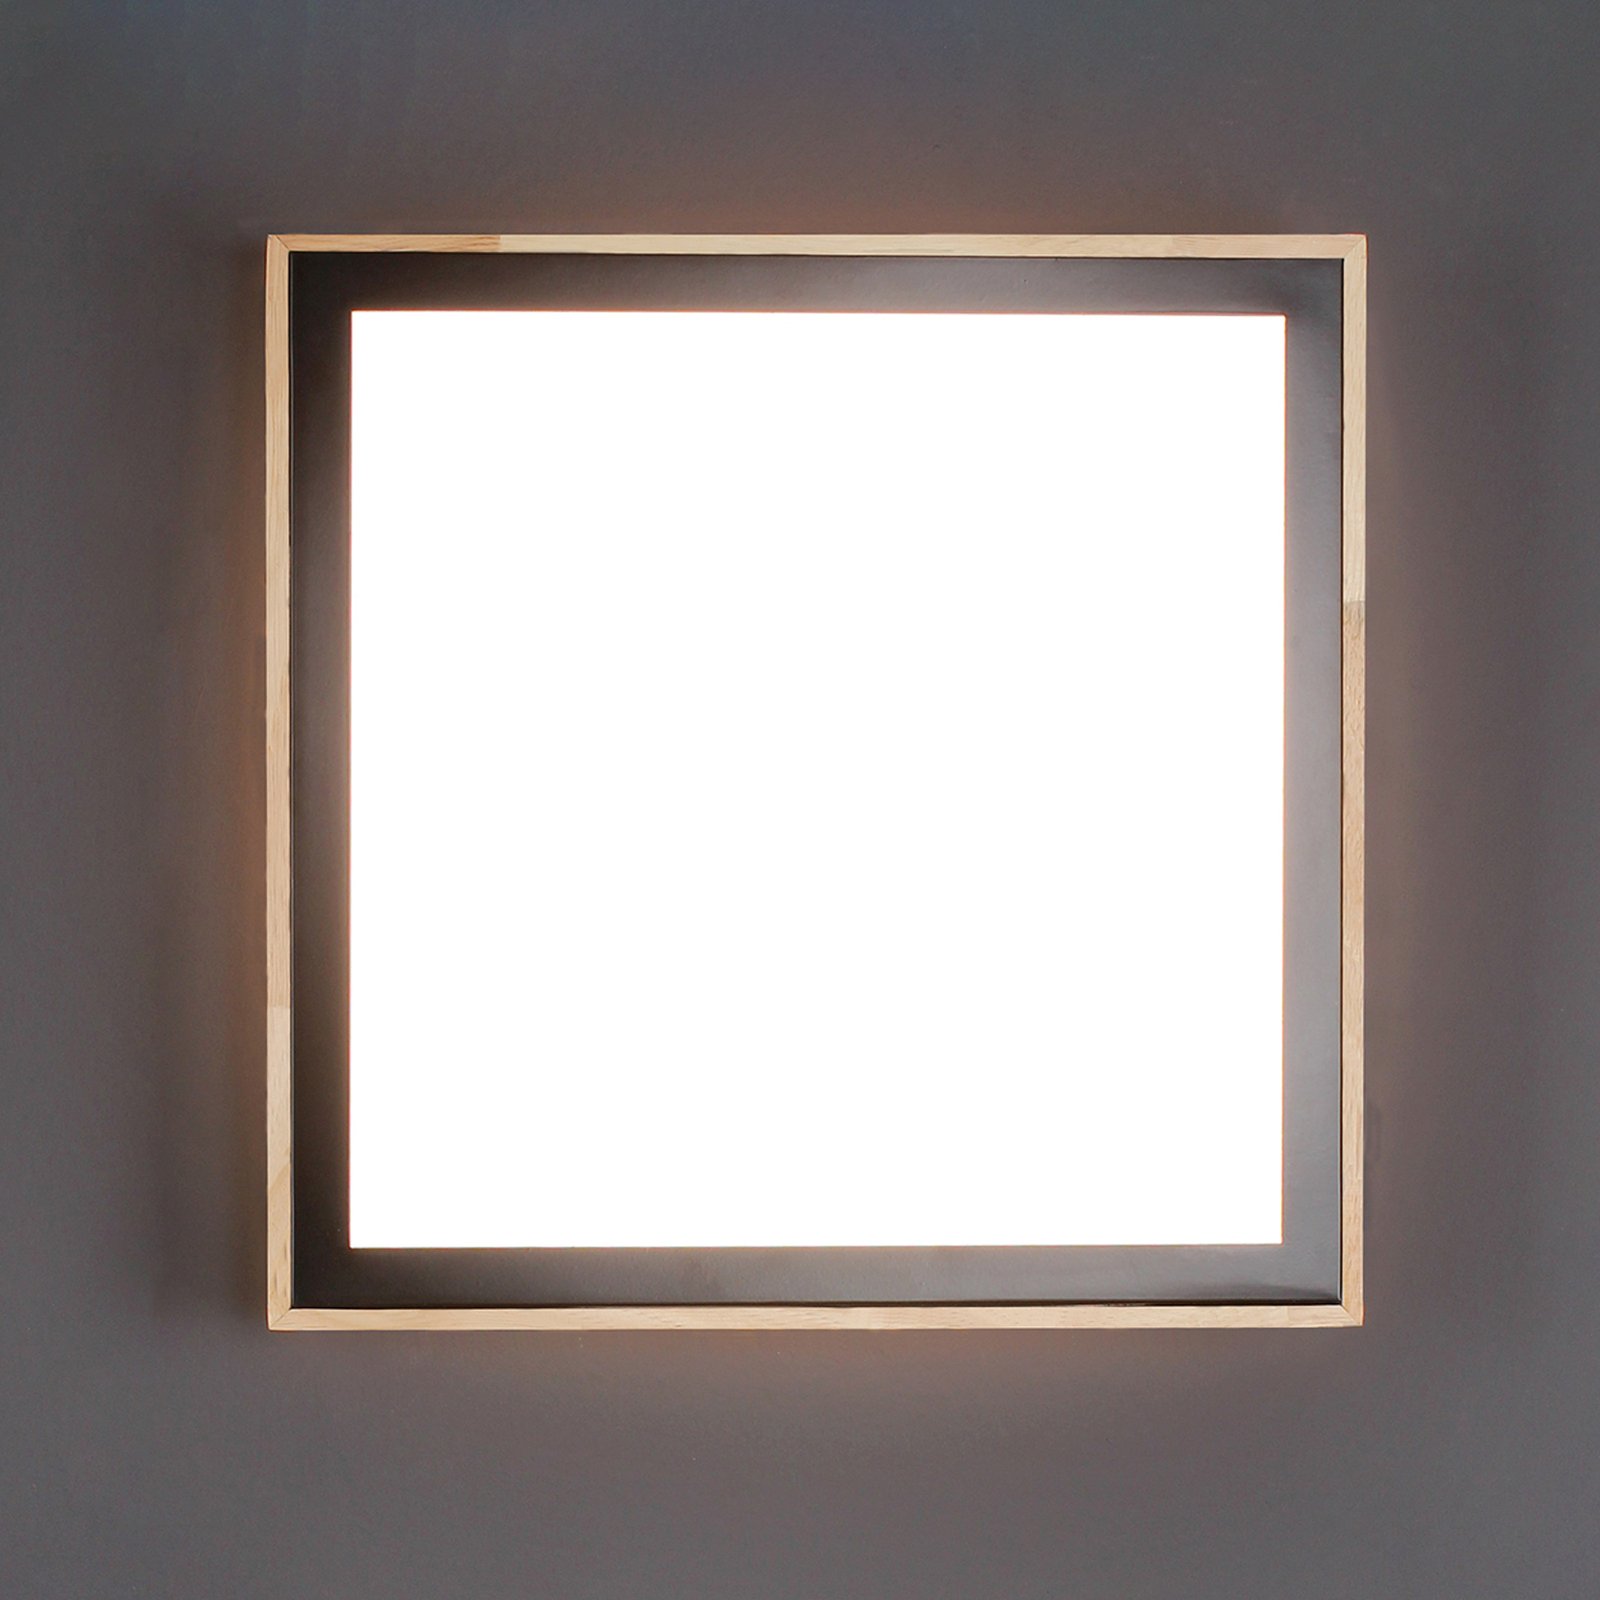 Lampa sufitowa LED Solstar, kątowa, 39 x 39 cm